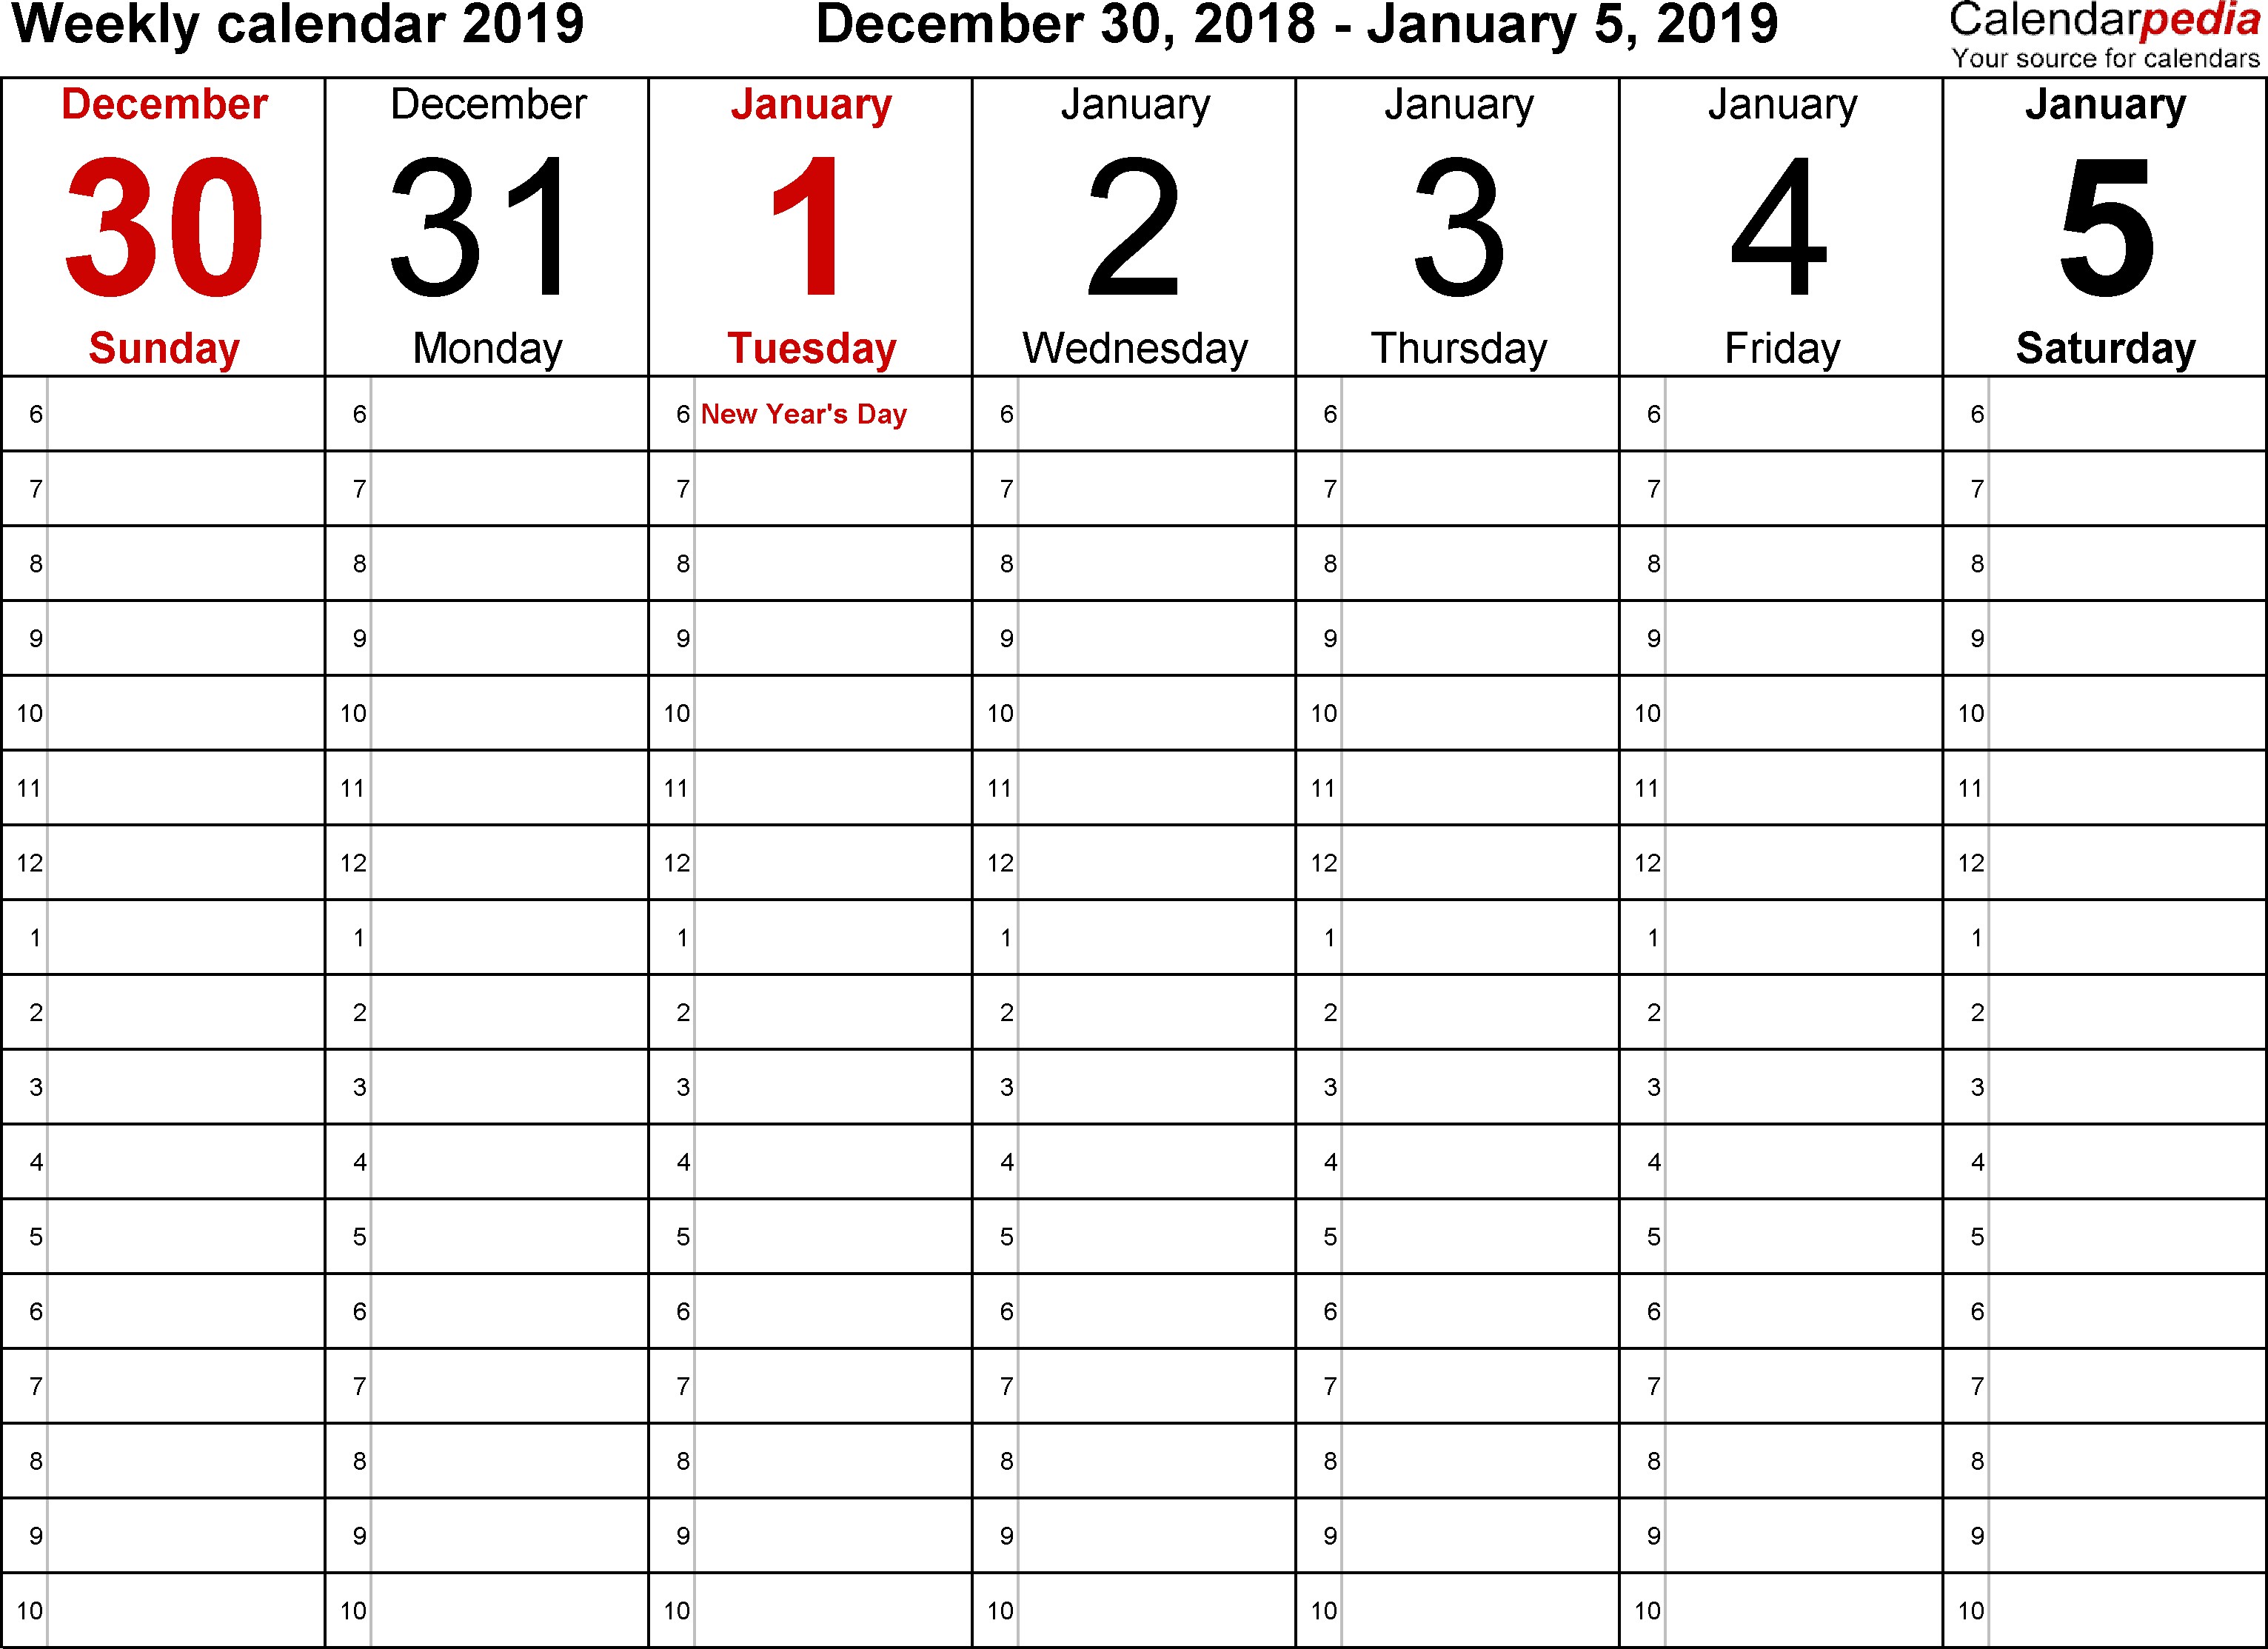 weekly calendar 2019 pdf templates